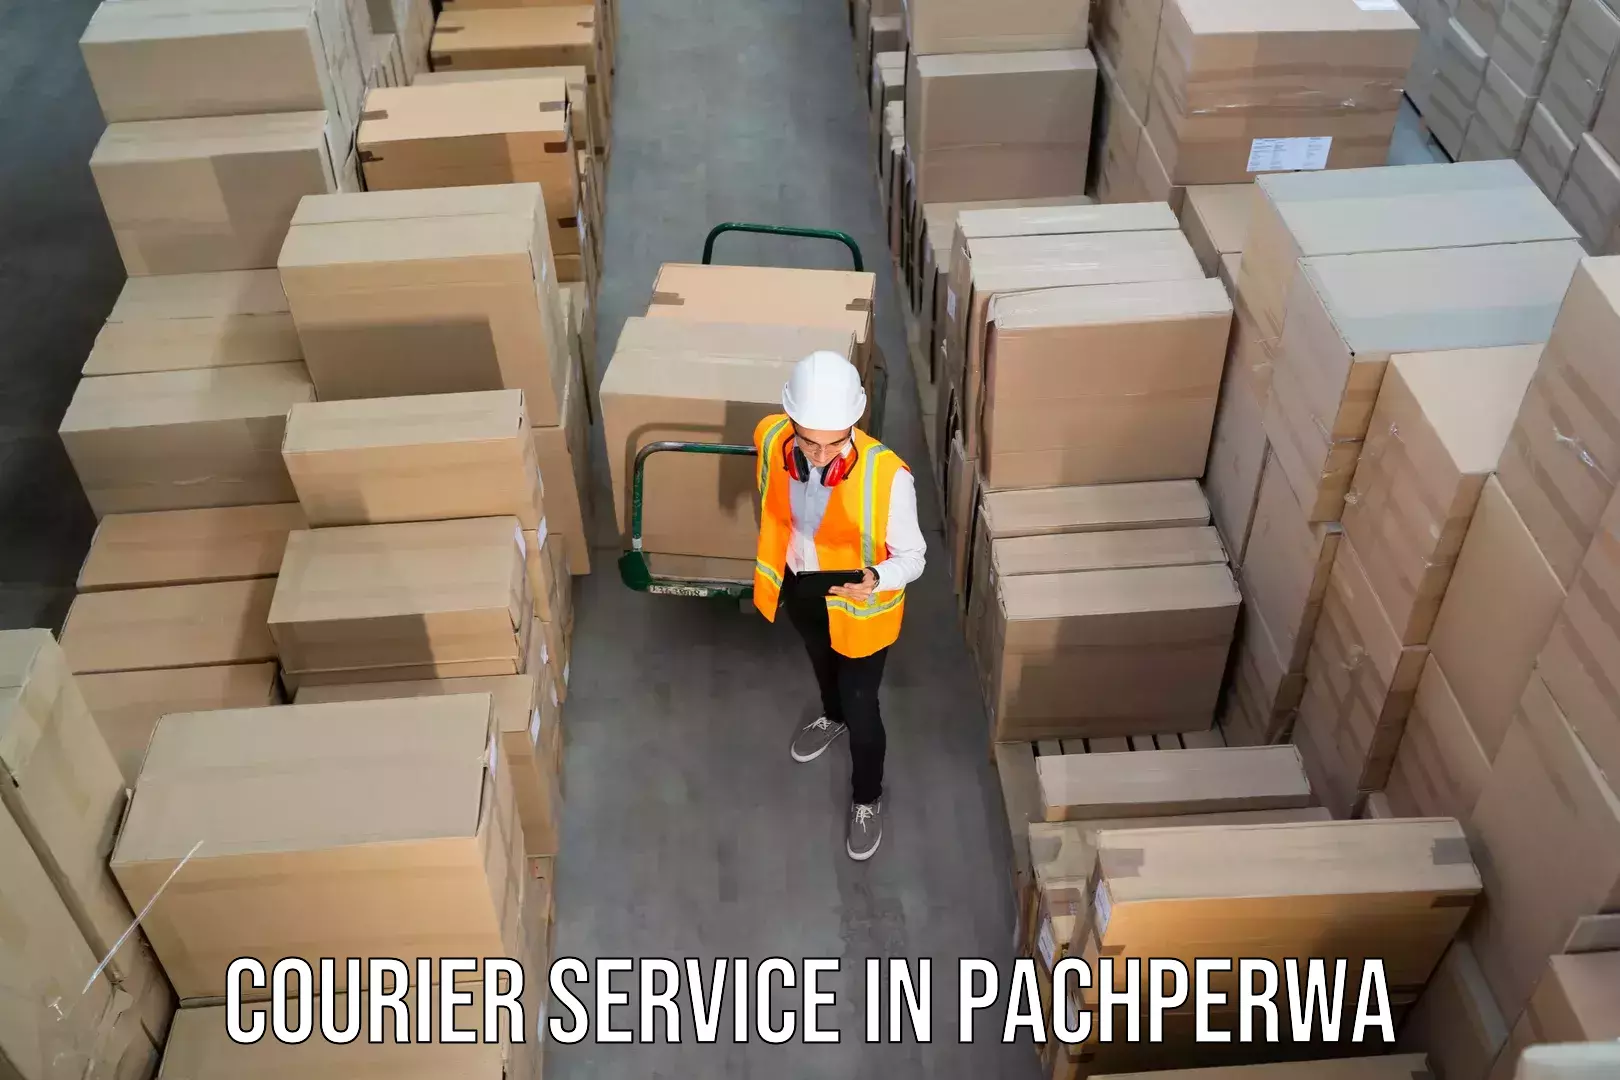 E-commerce fulfillment in Pachperwa